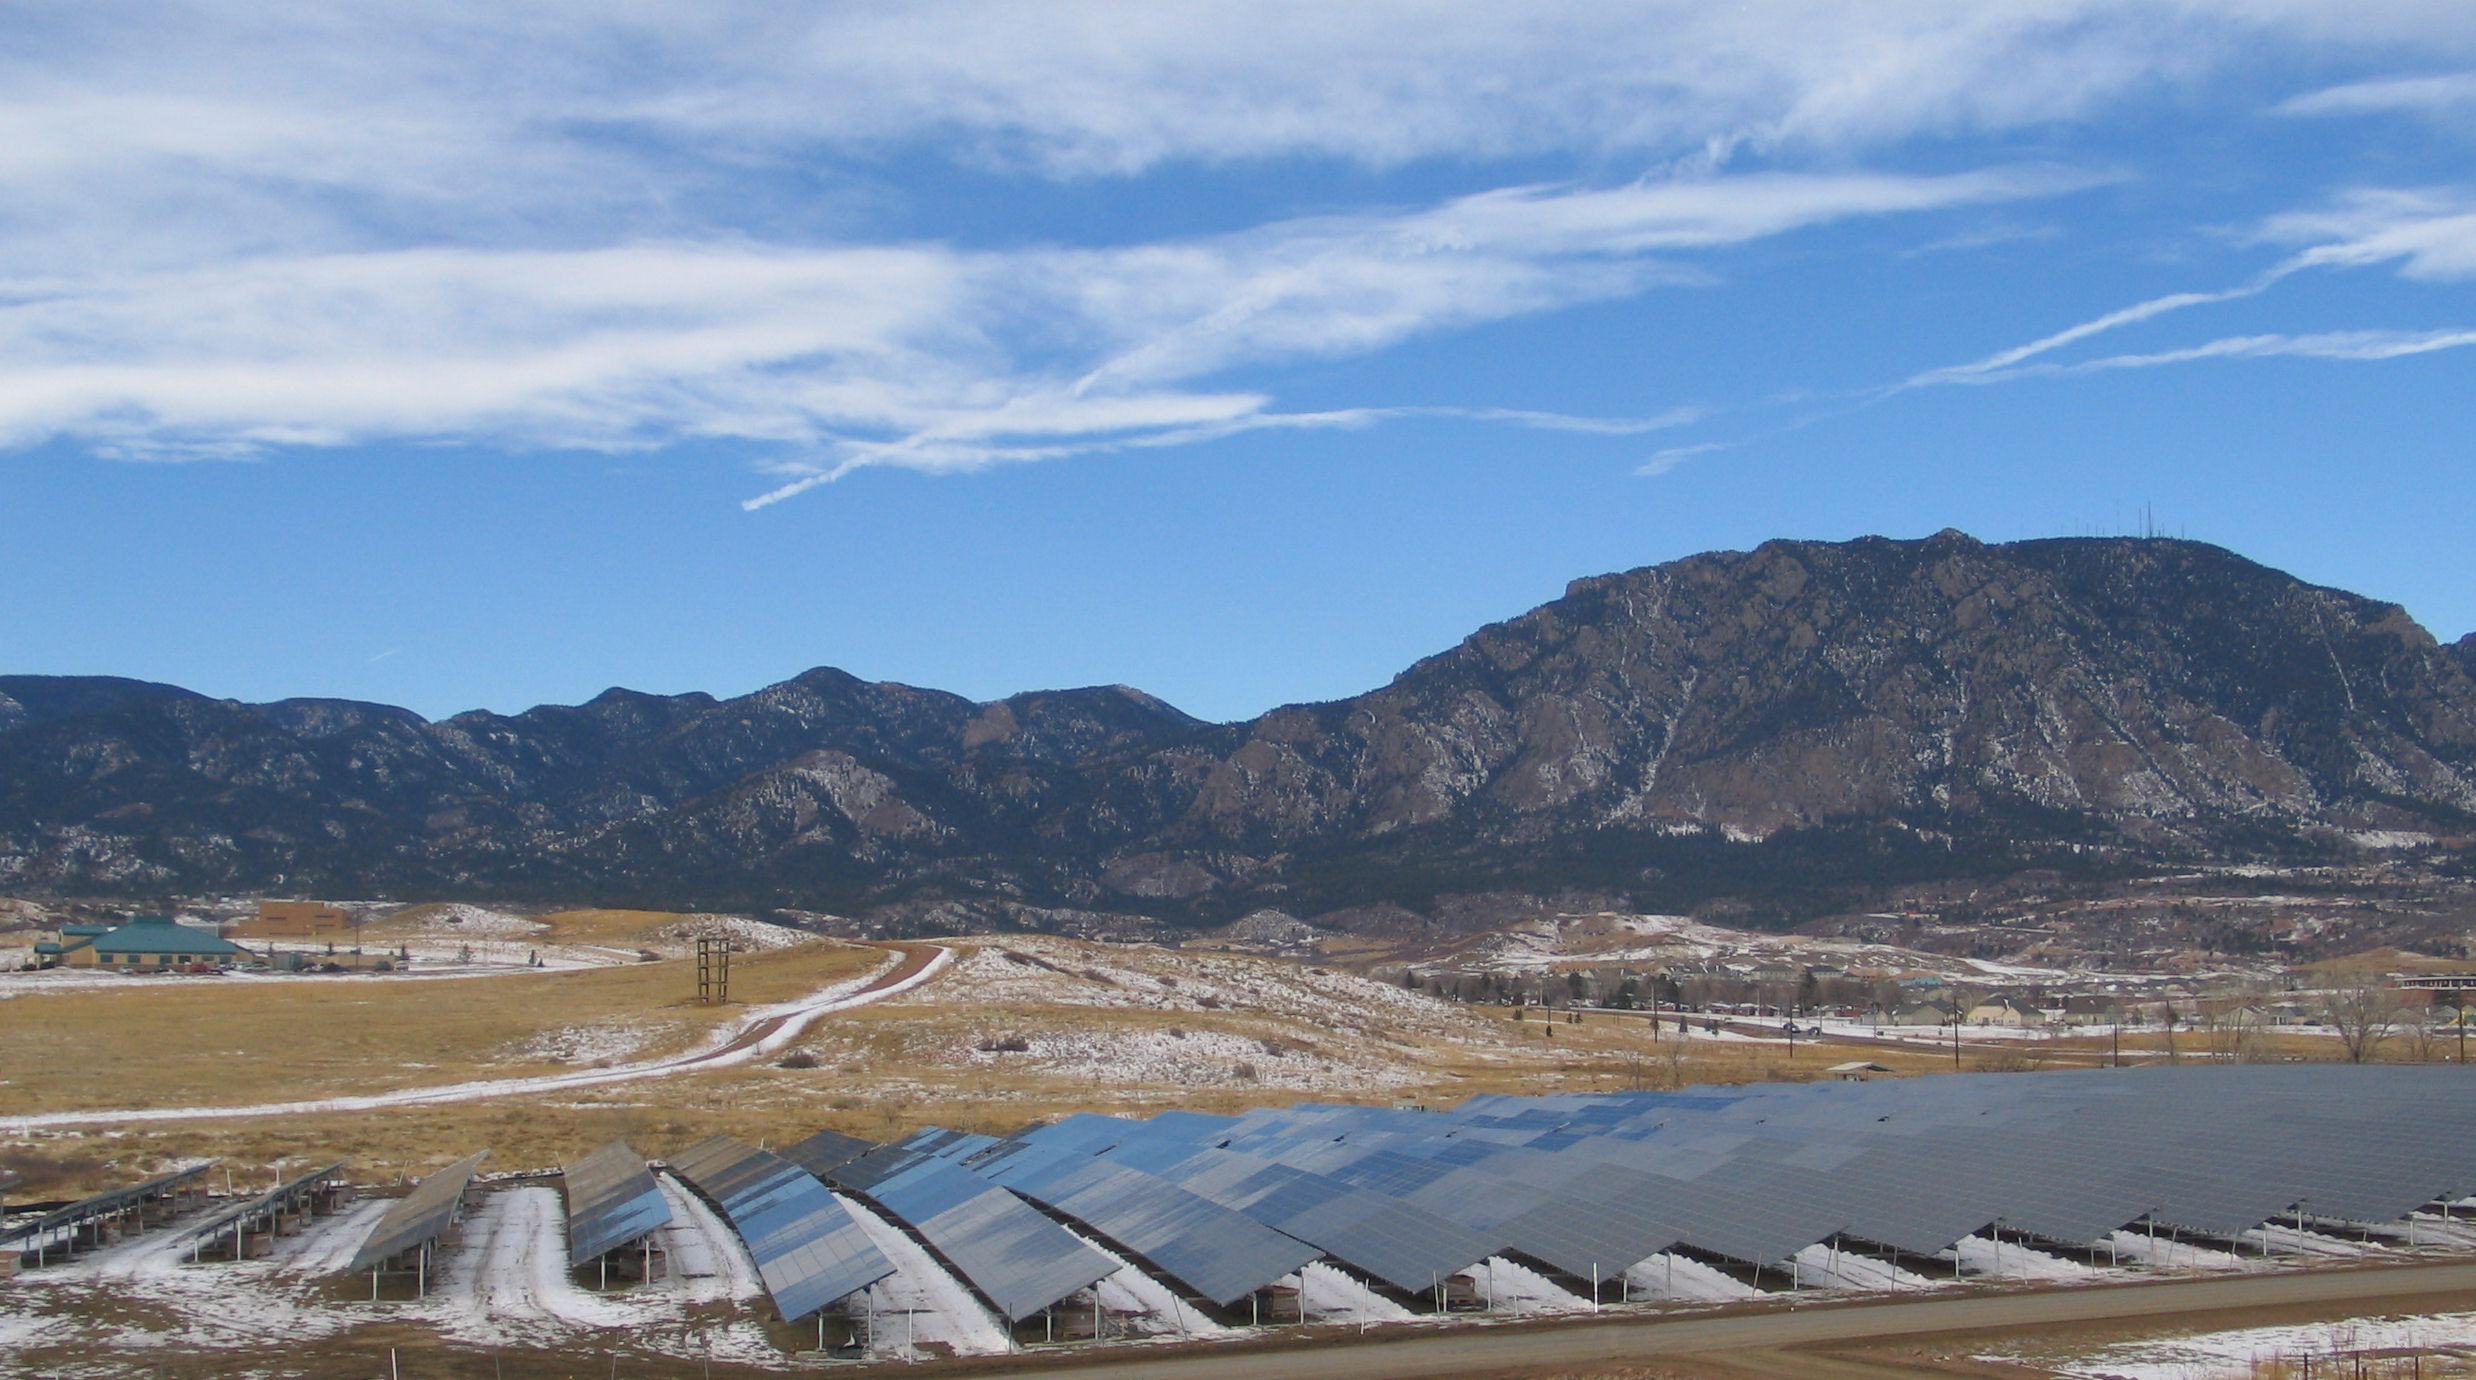 12-acre solar array